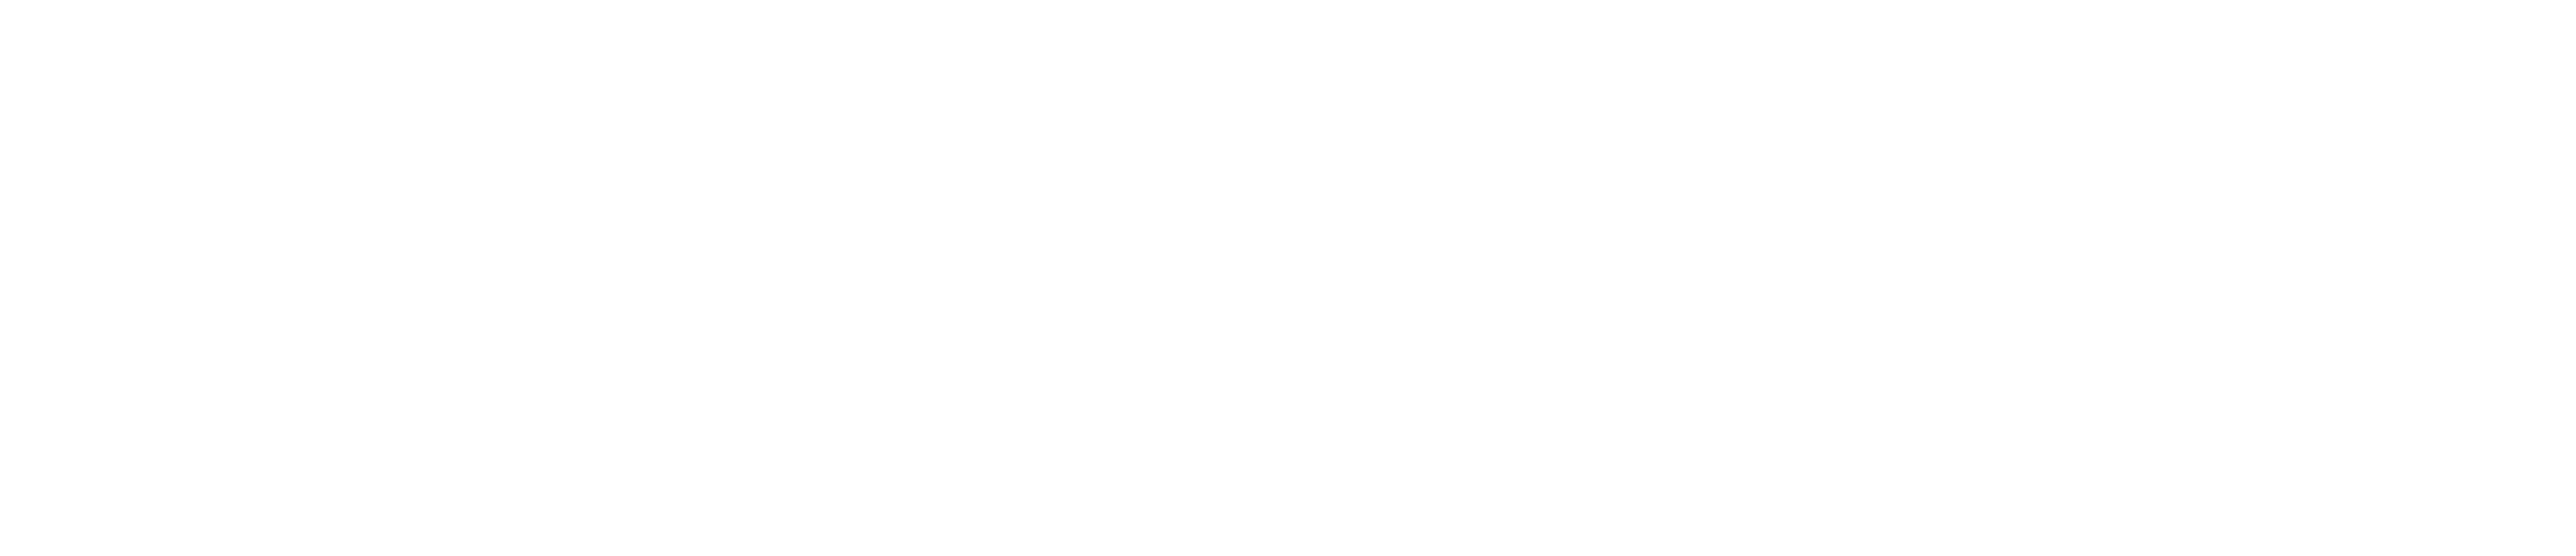 Emory University School of Medicine Vaccine Research Clinic Department of Pediatrics Unit Signature Logo